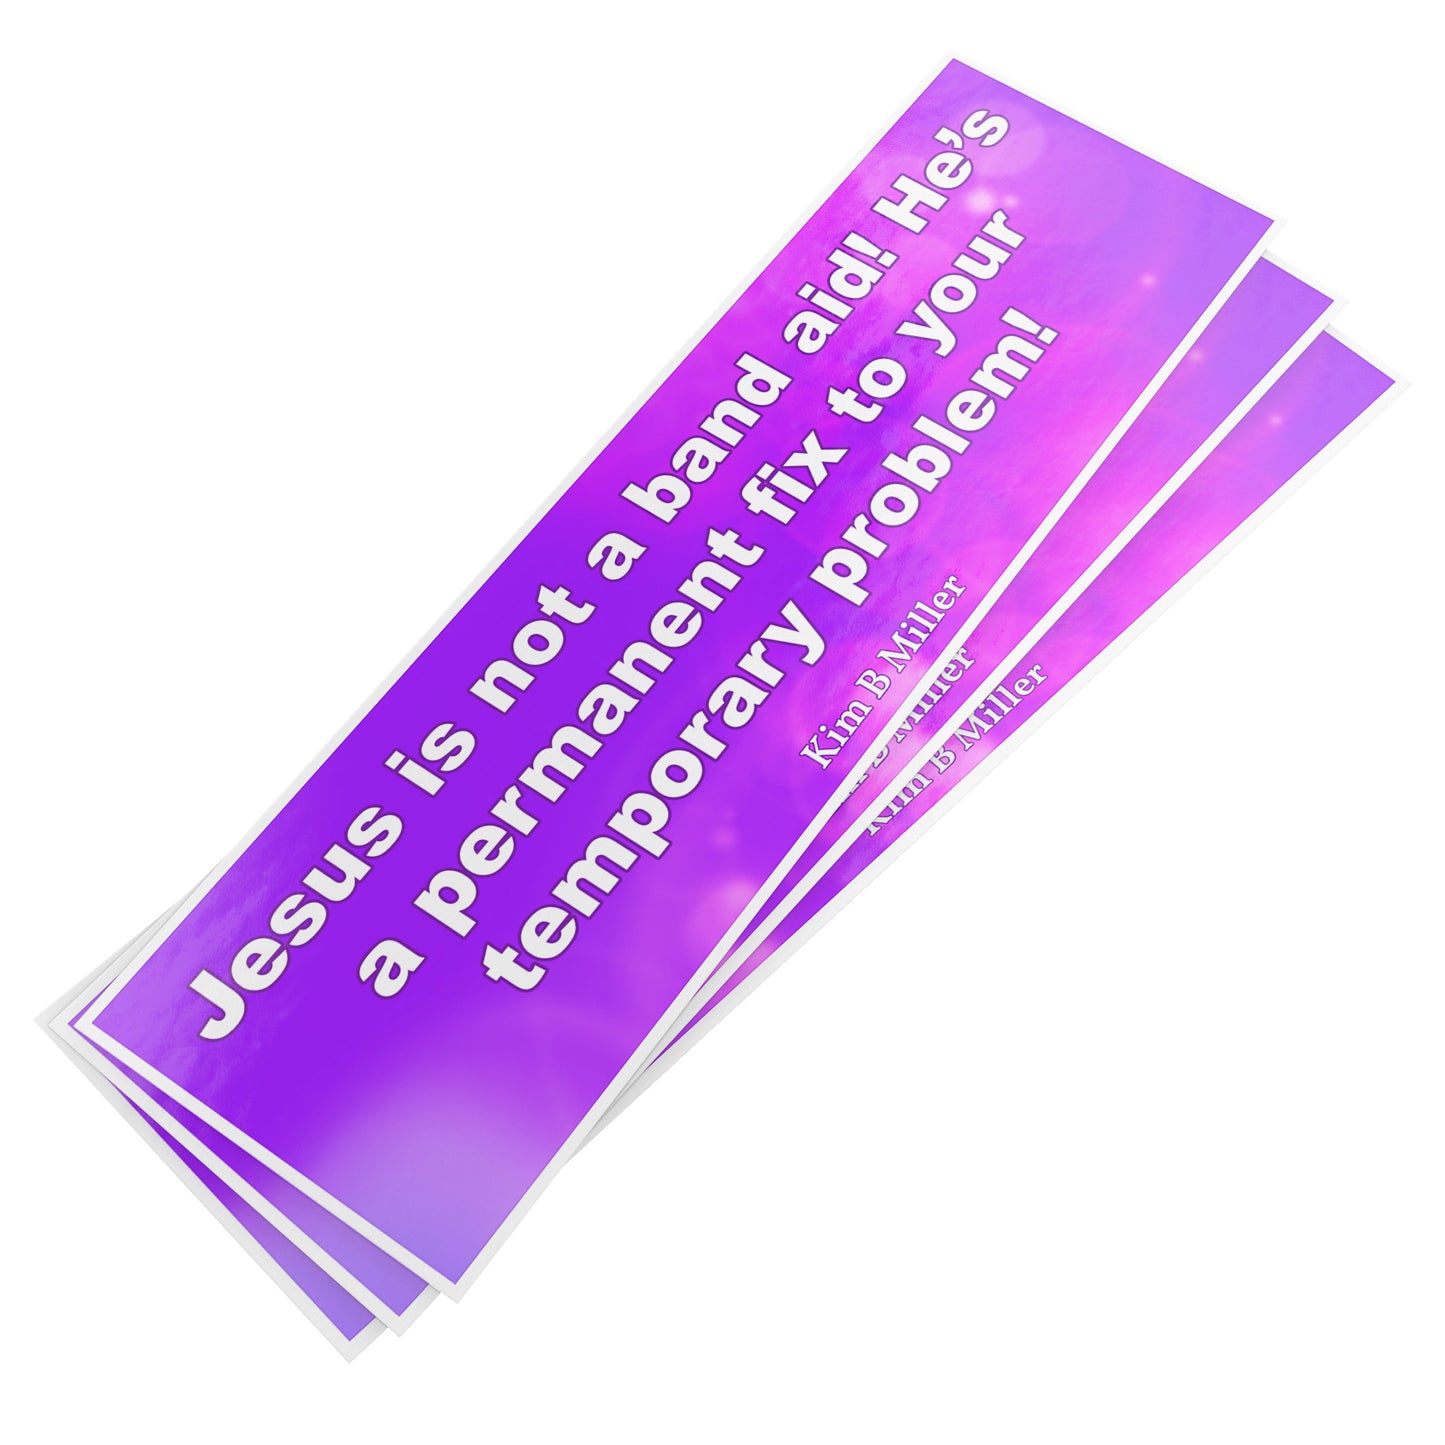 Jesus Band Aid Bumper/Laptop Sticker Purple